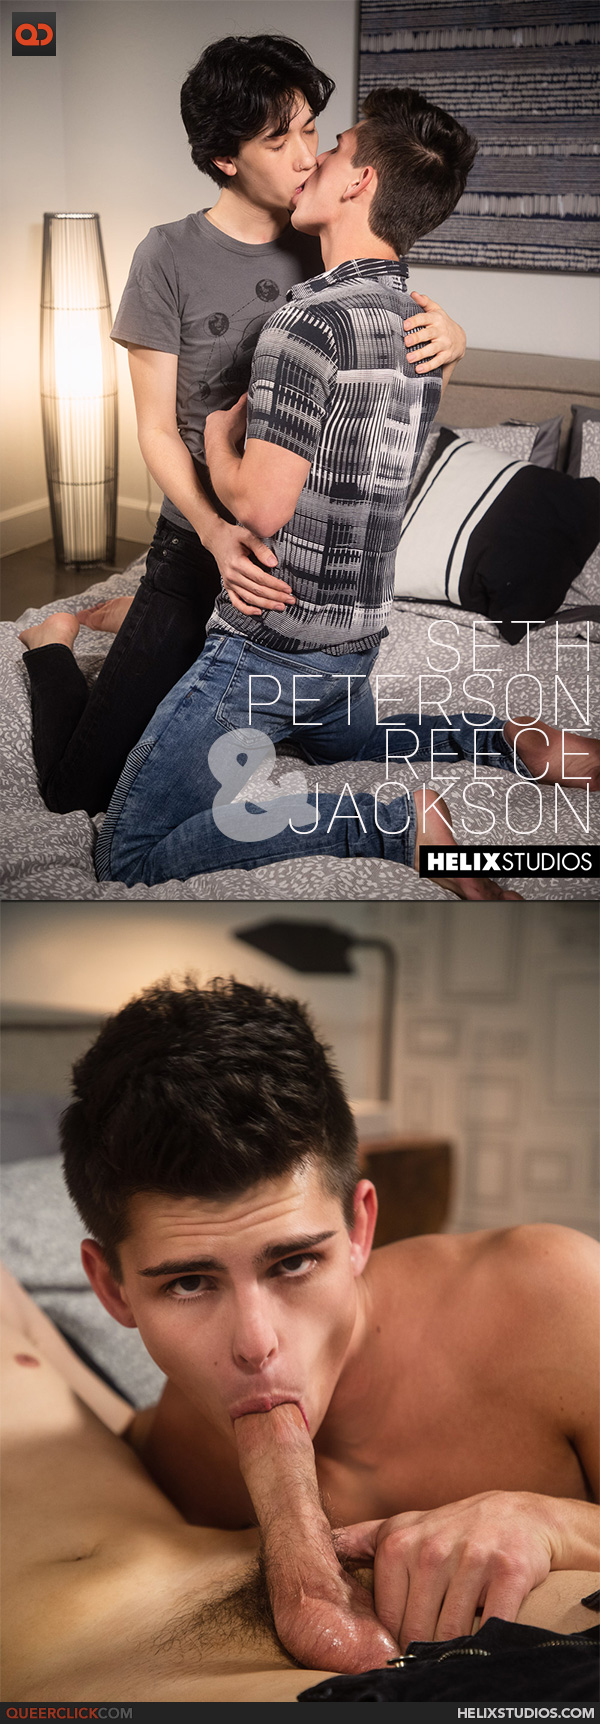 Helix Studios: Seth Peterson and Reece Jackson